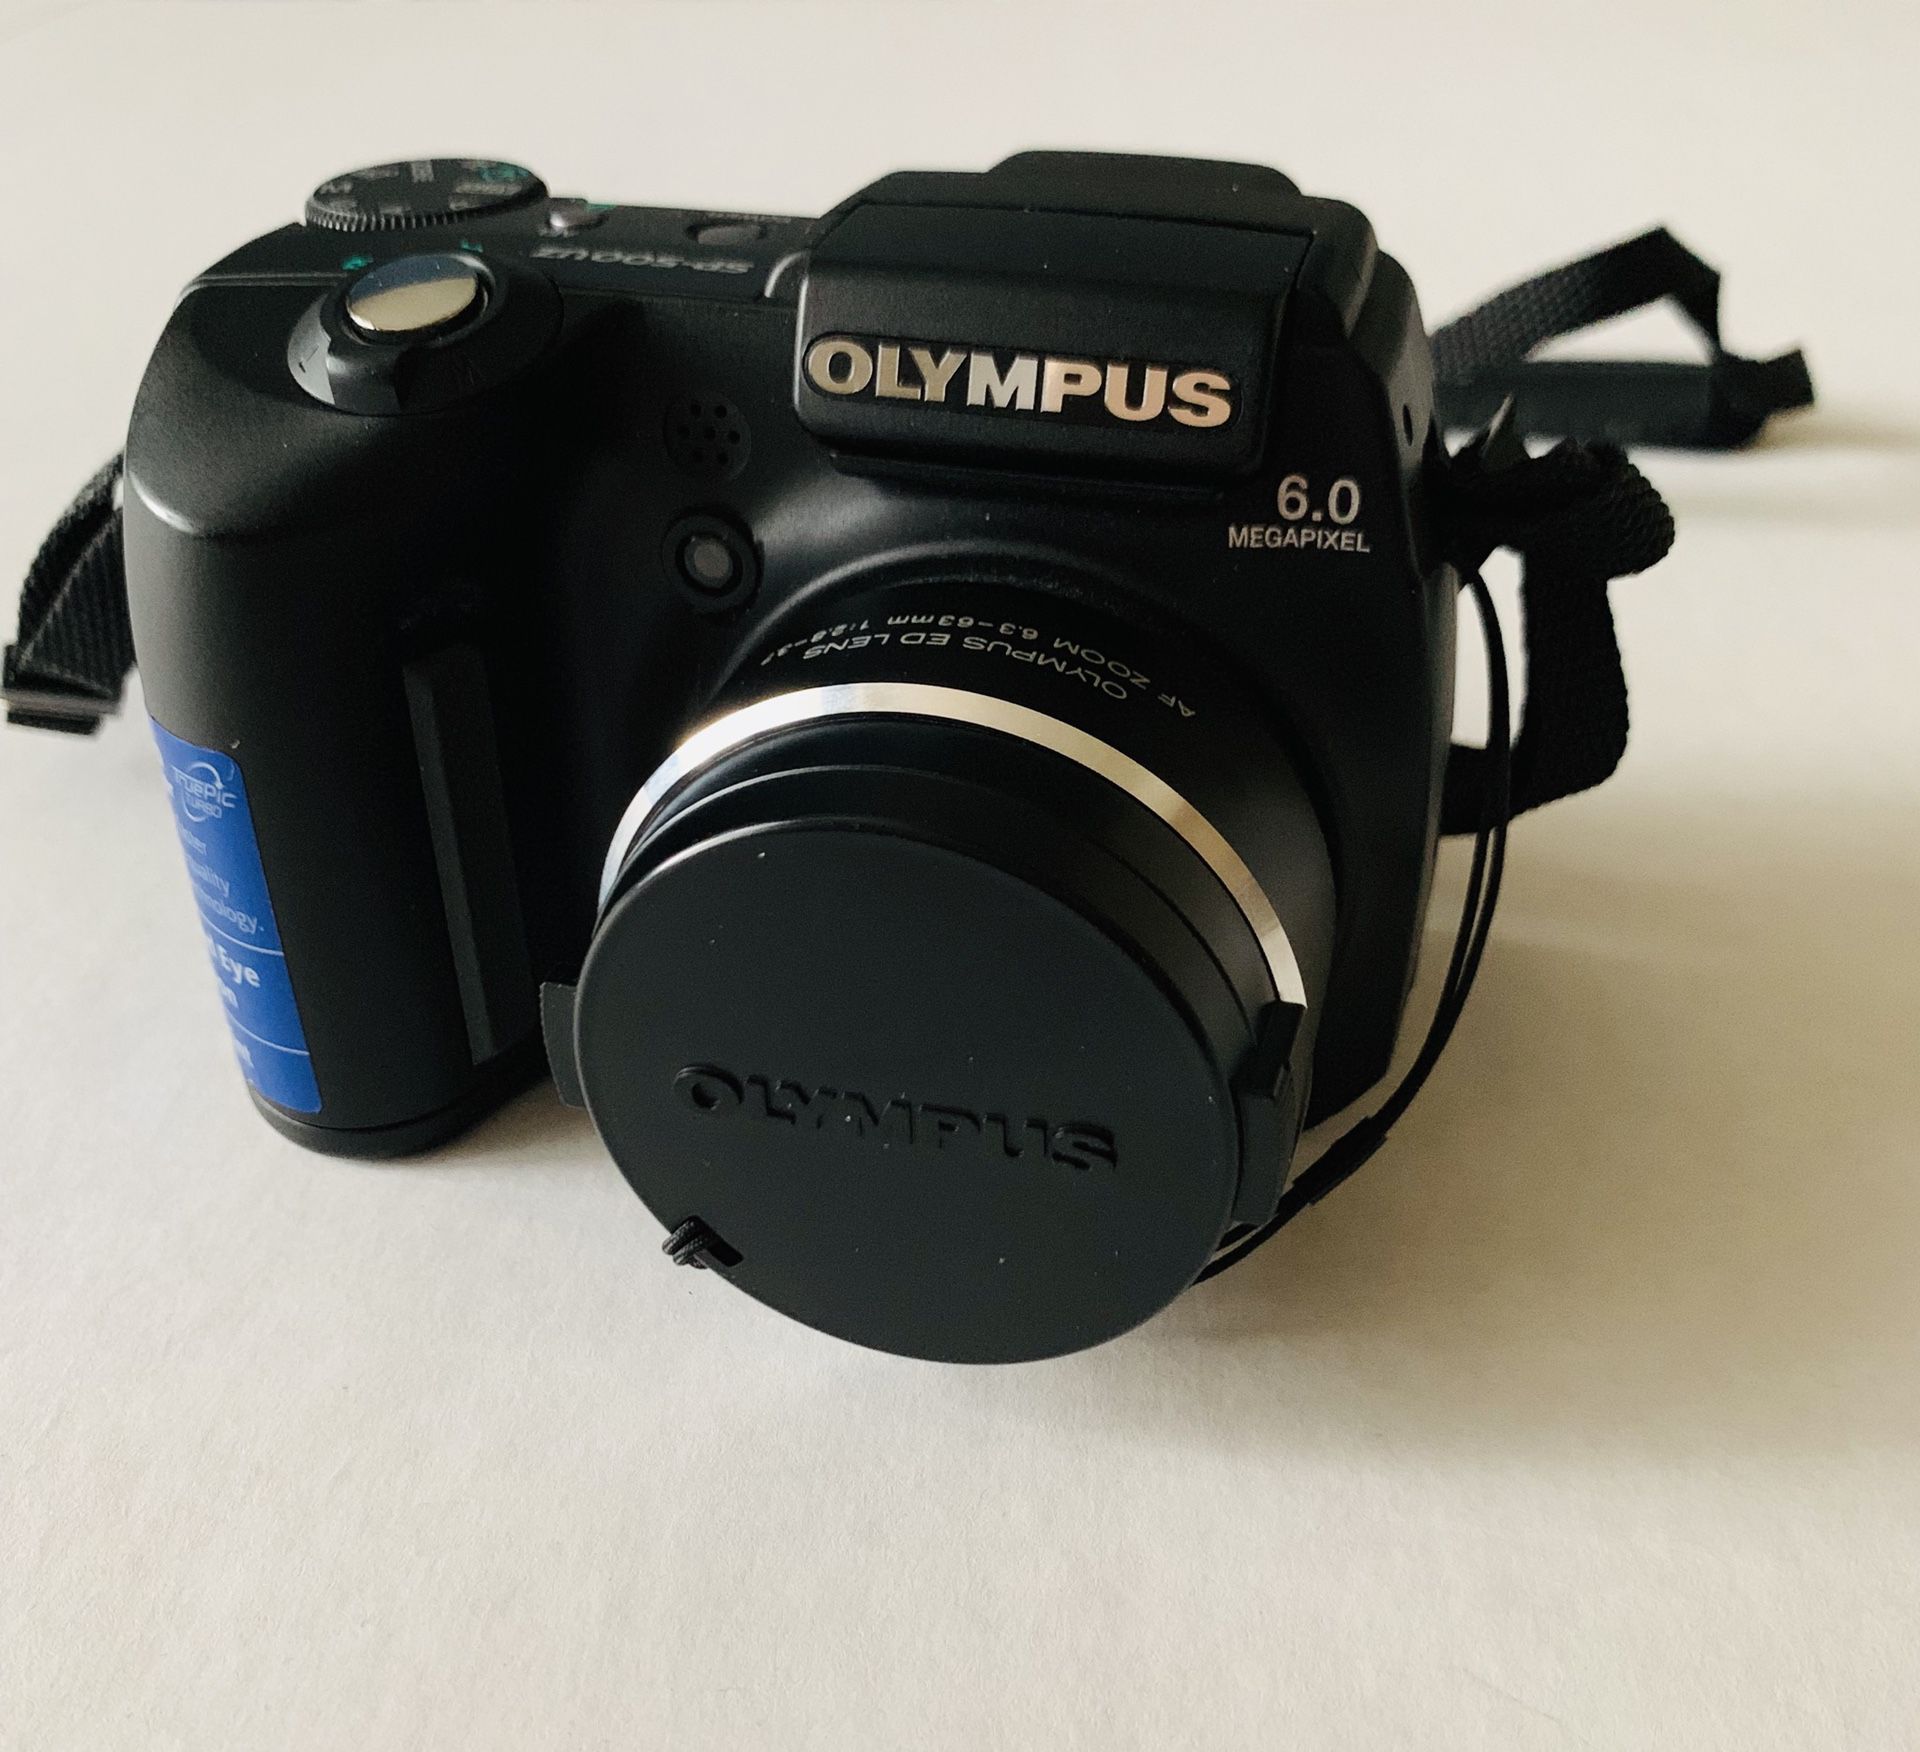 Olympus SP-500UZ- AF ZOOM 6.3-63mm- 10x Optical Zoom- Digital Camera Bundle with carry bag. Condition is Used.